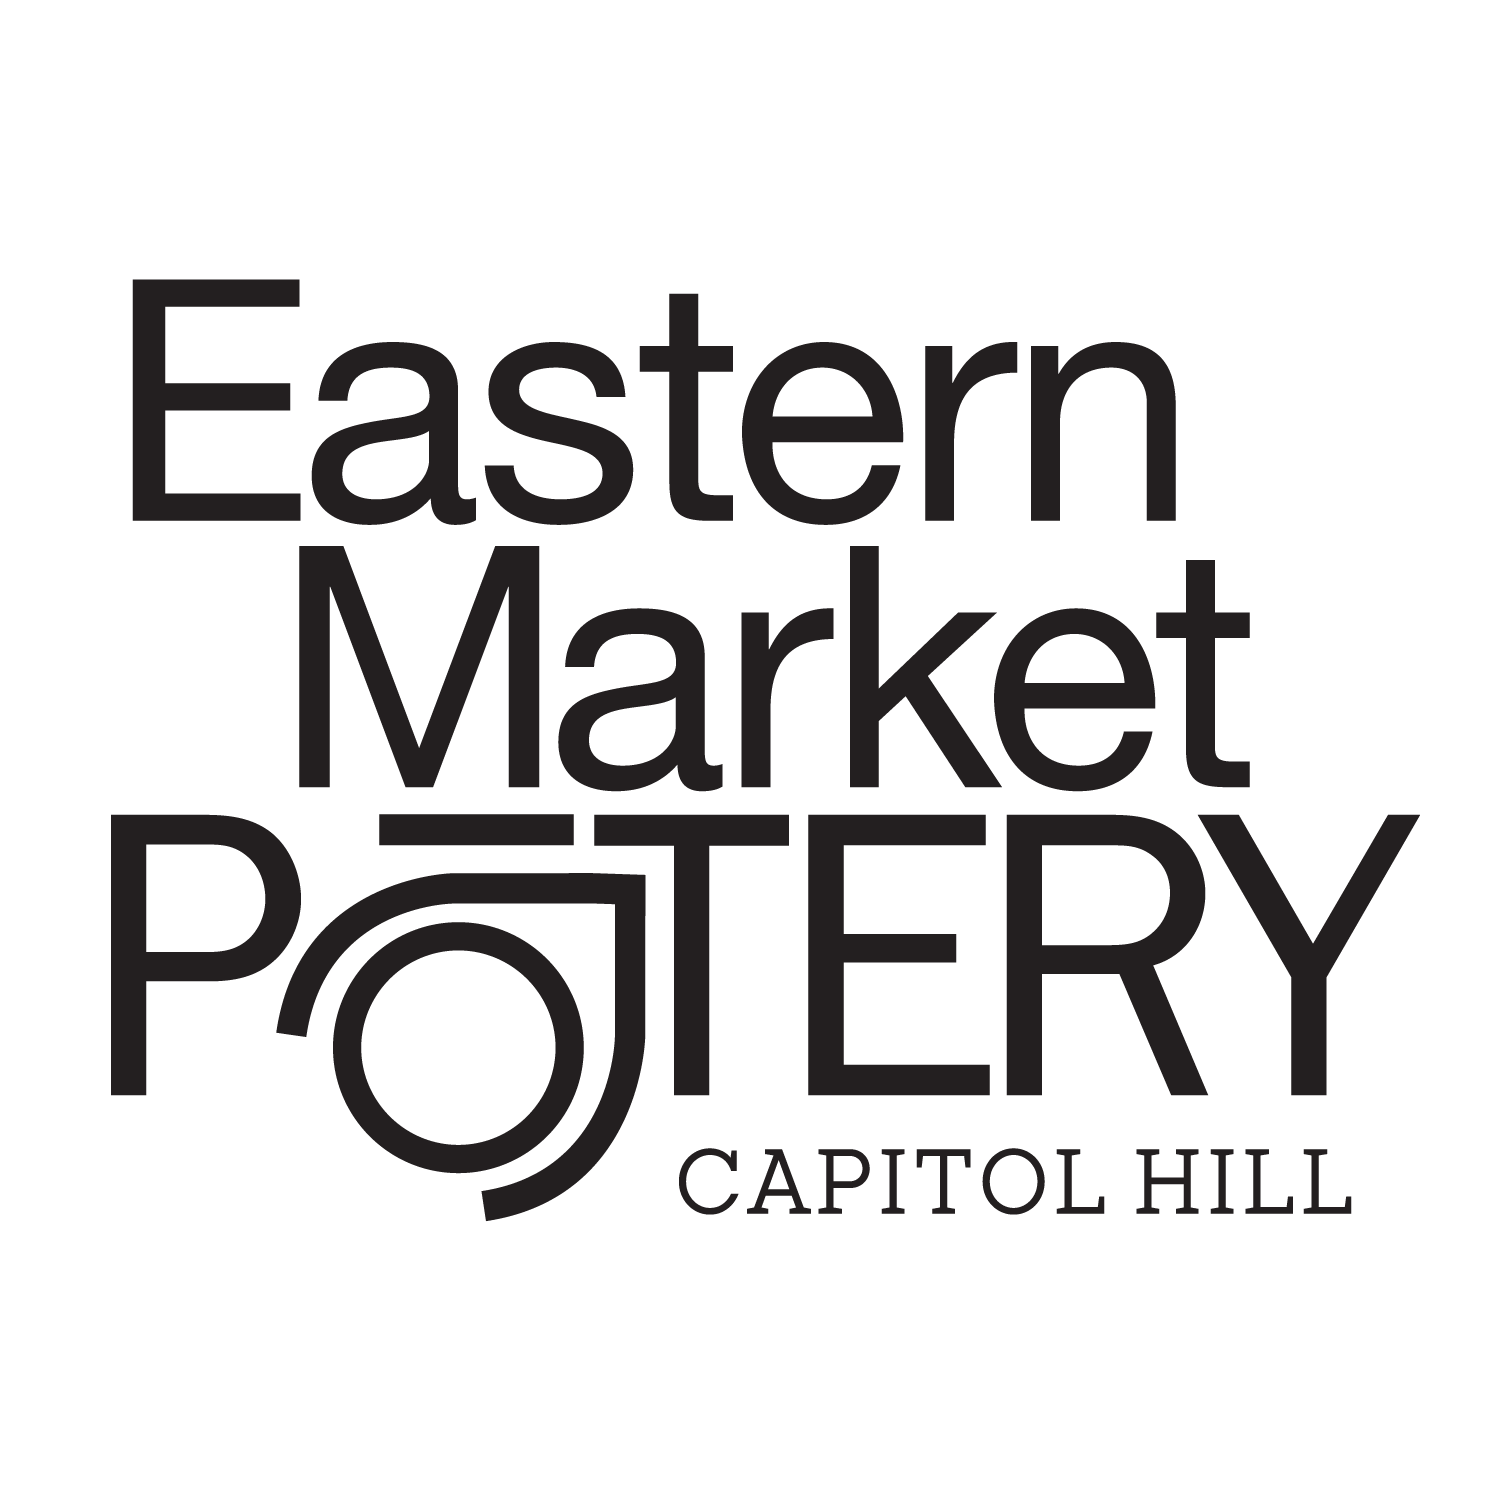 Eastern Market Pottery